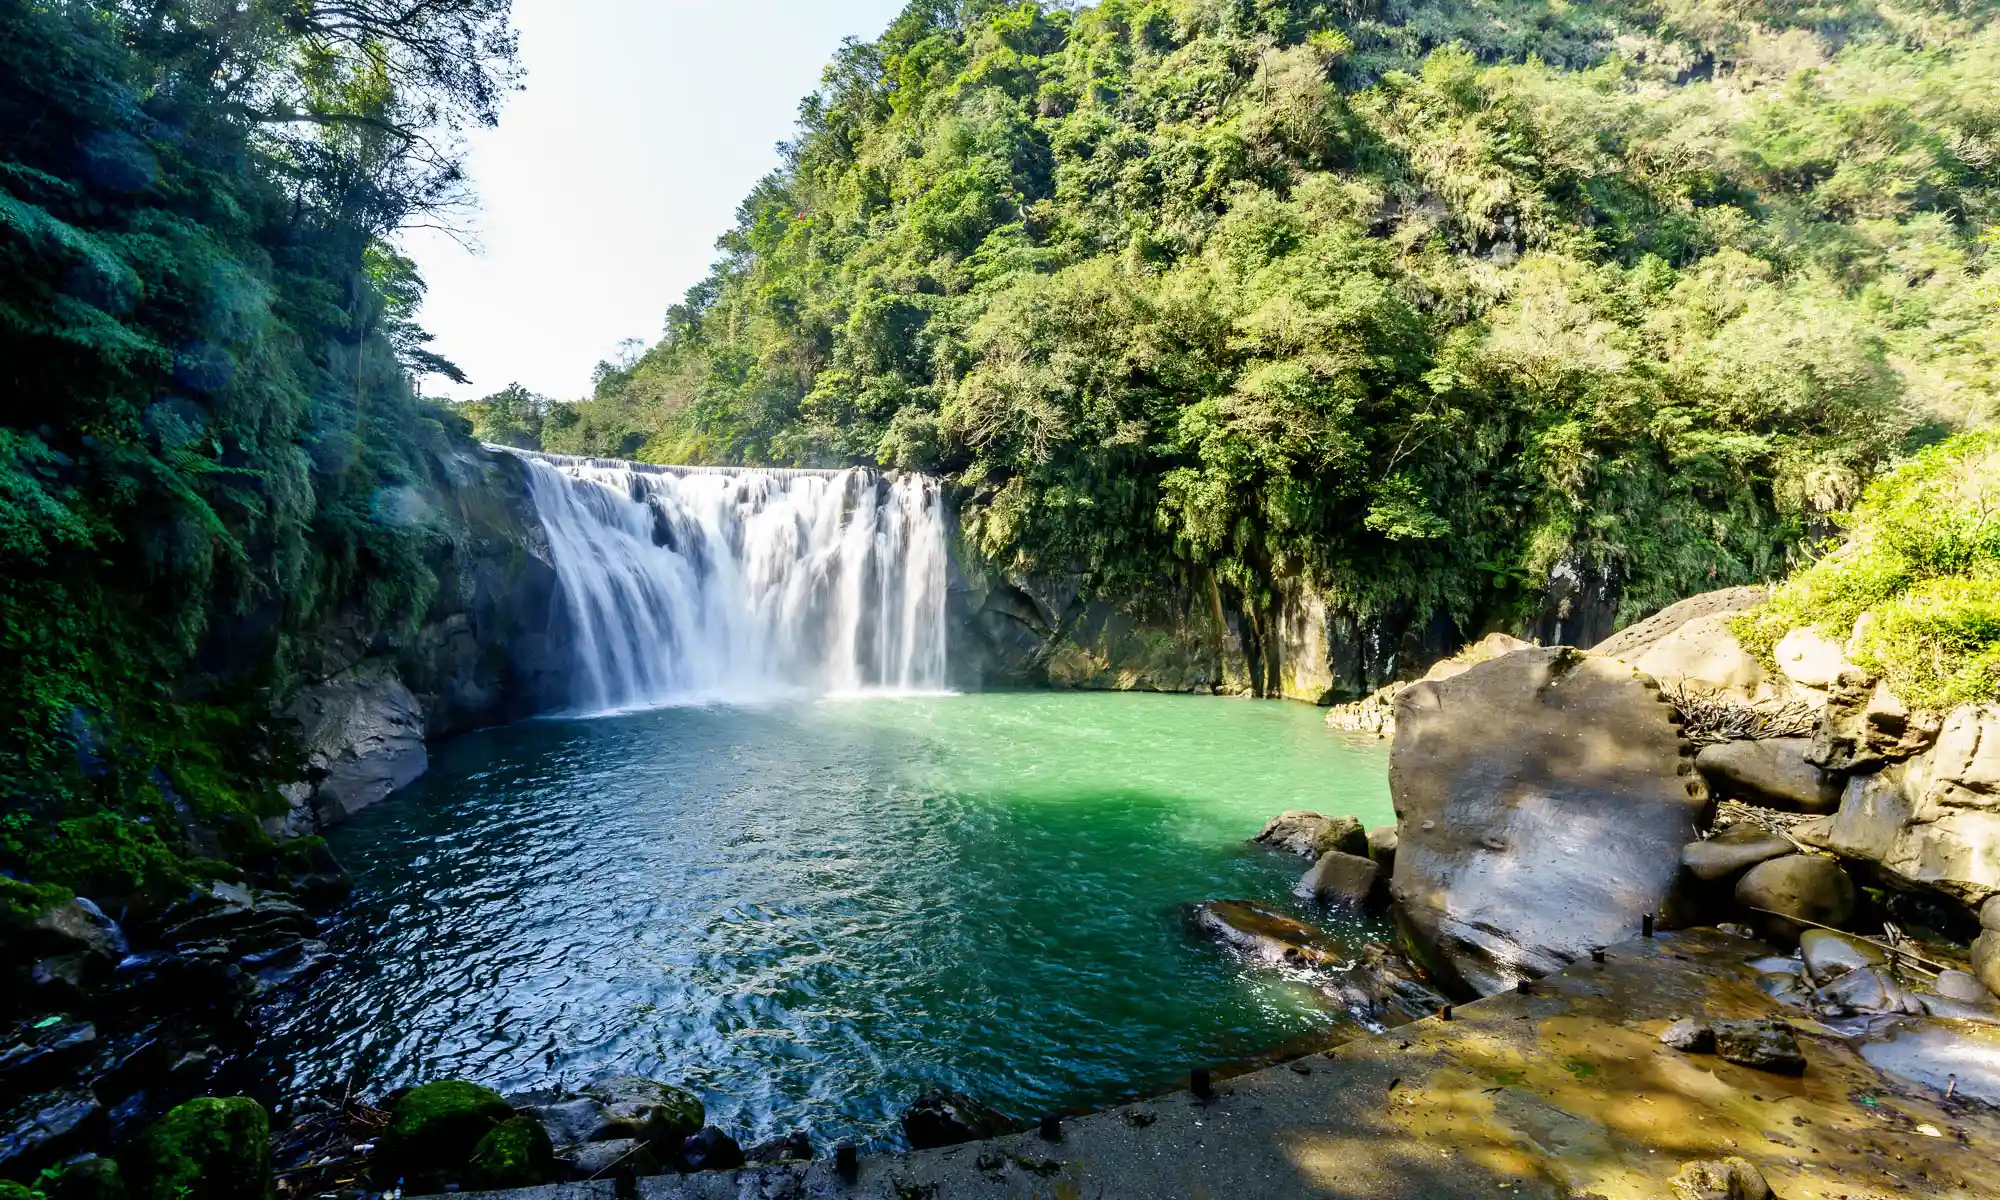 The horseshoe-shaped Shifen Waterfall plummets into a deep green bowl-shaped pool.